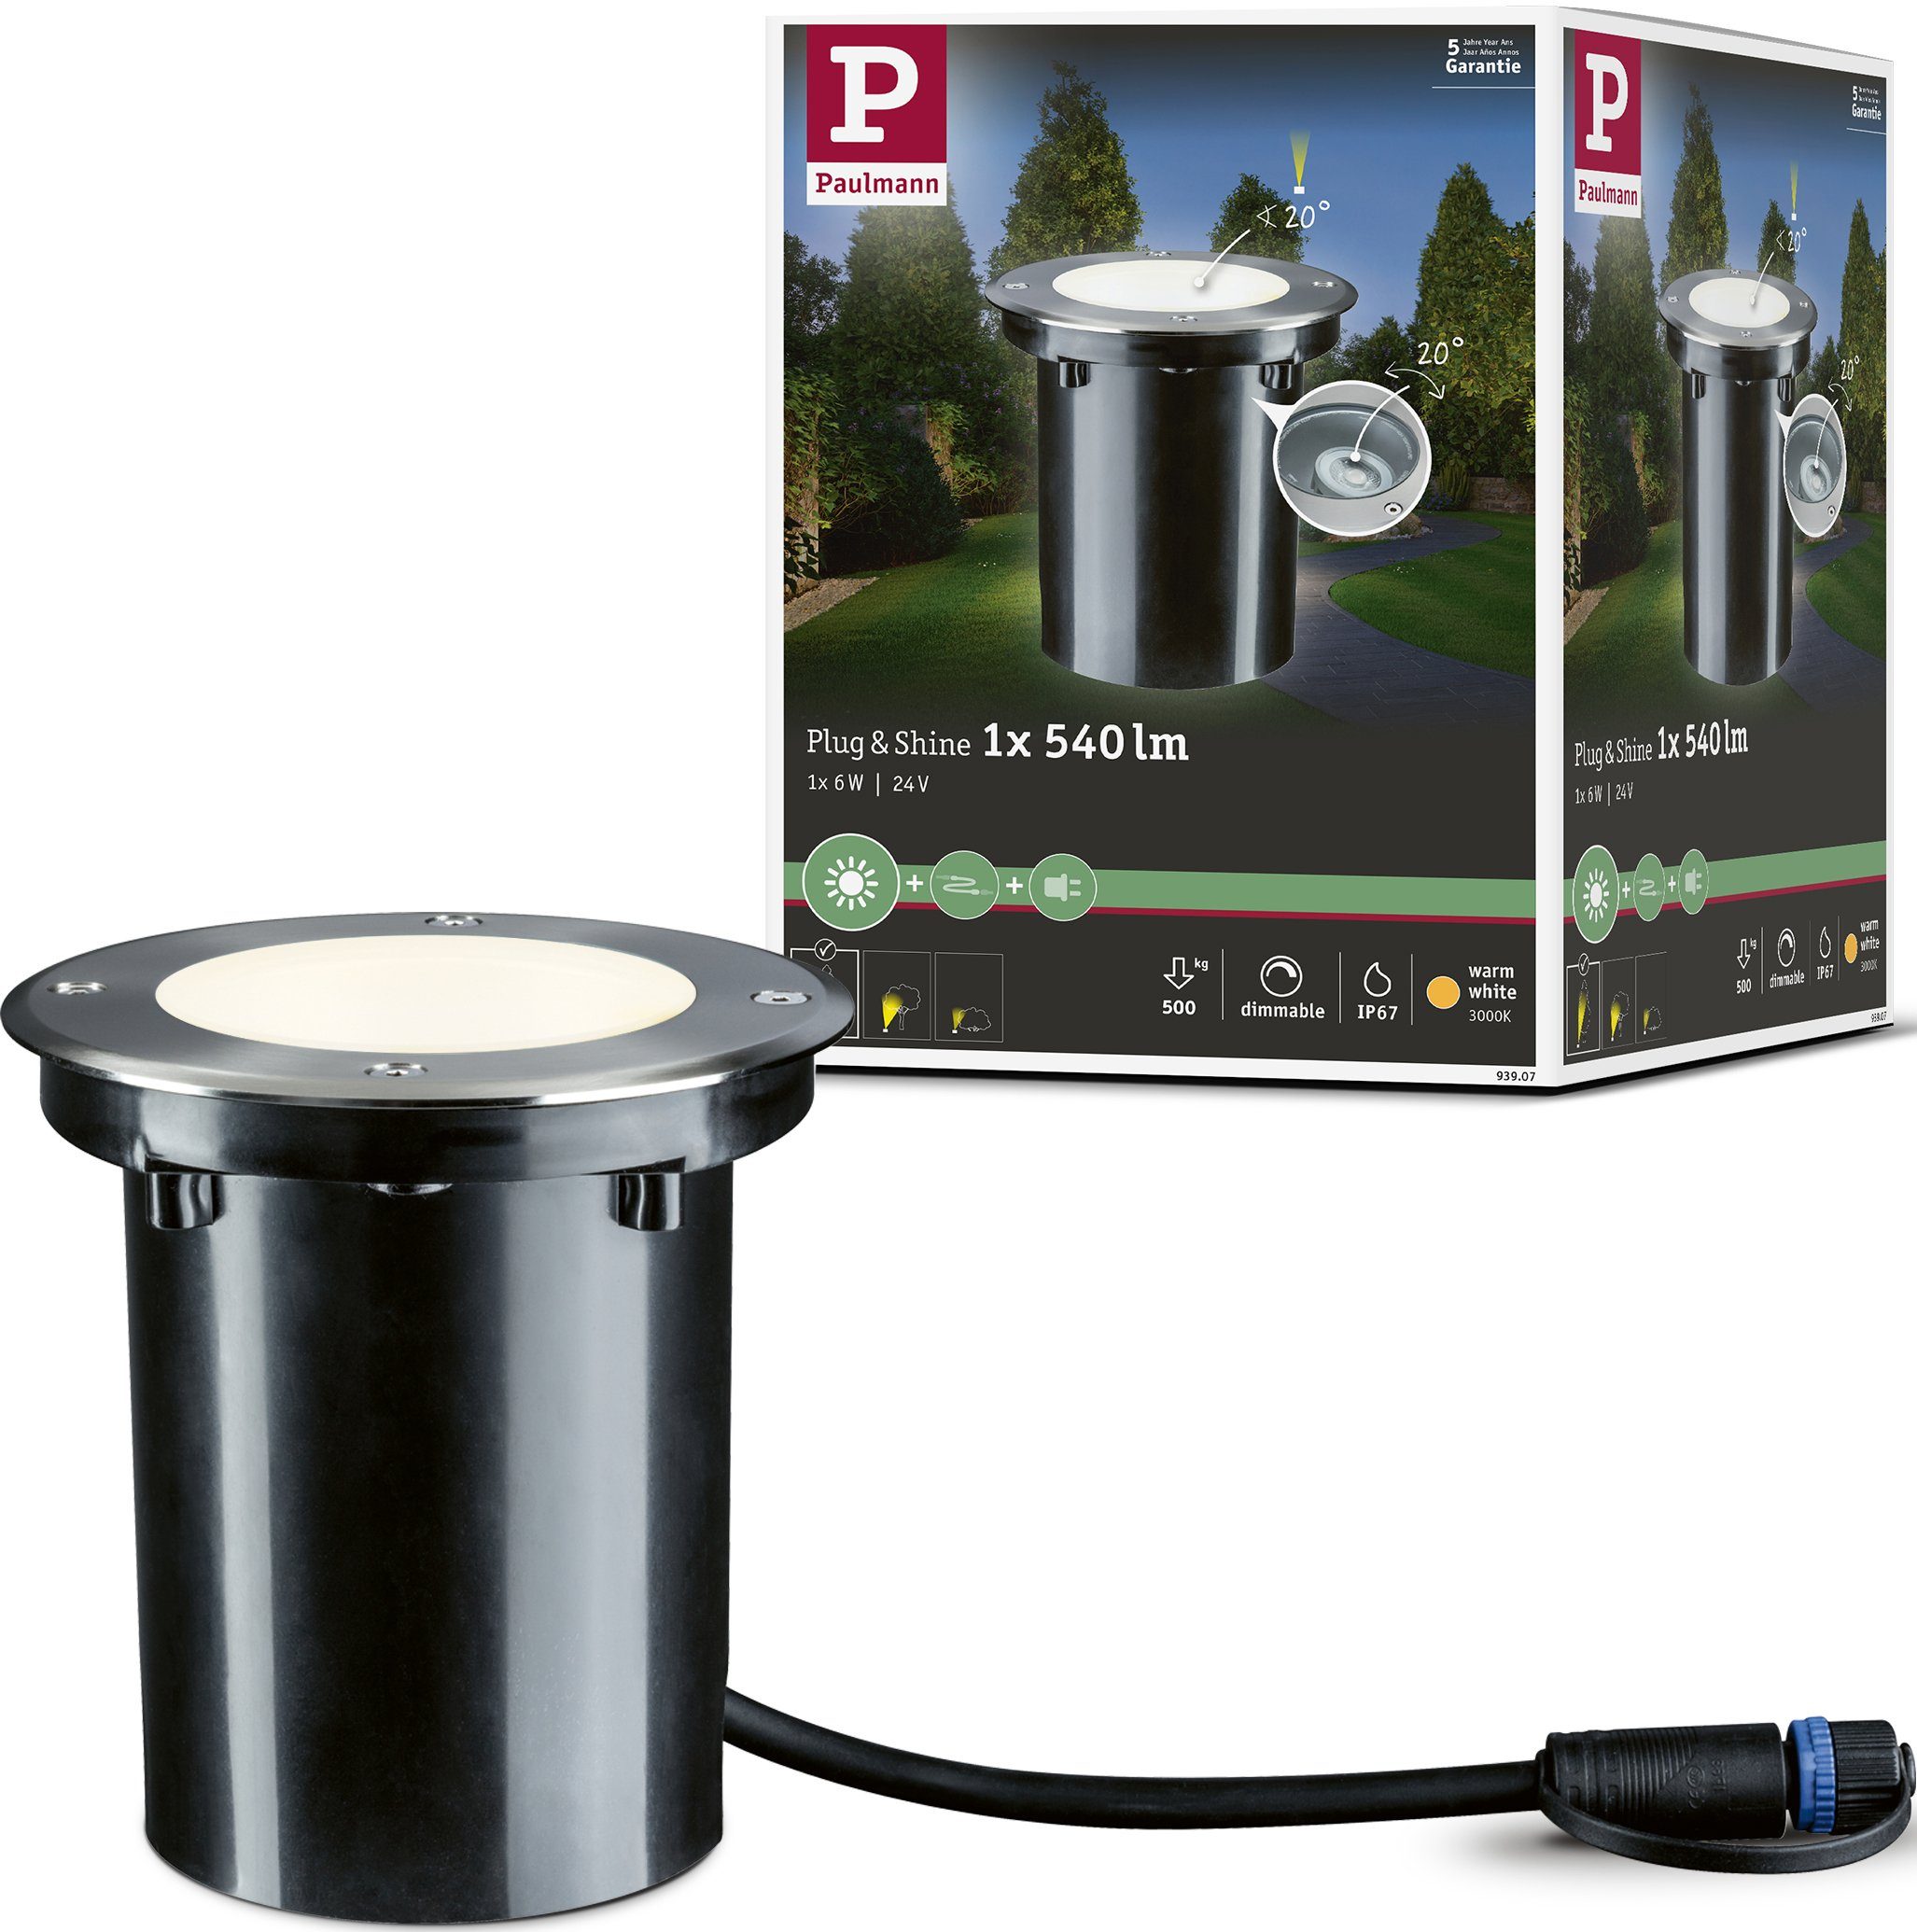 Paulmann LED Einbauleuchte IP67 Shine, Plug integriert, & Plug fest 24Vschwenkbar Shine, Warmweiß, & LED 3000K